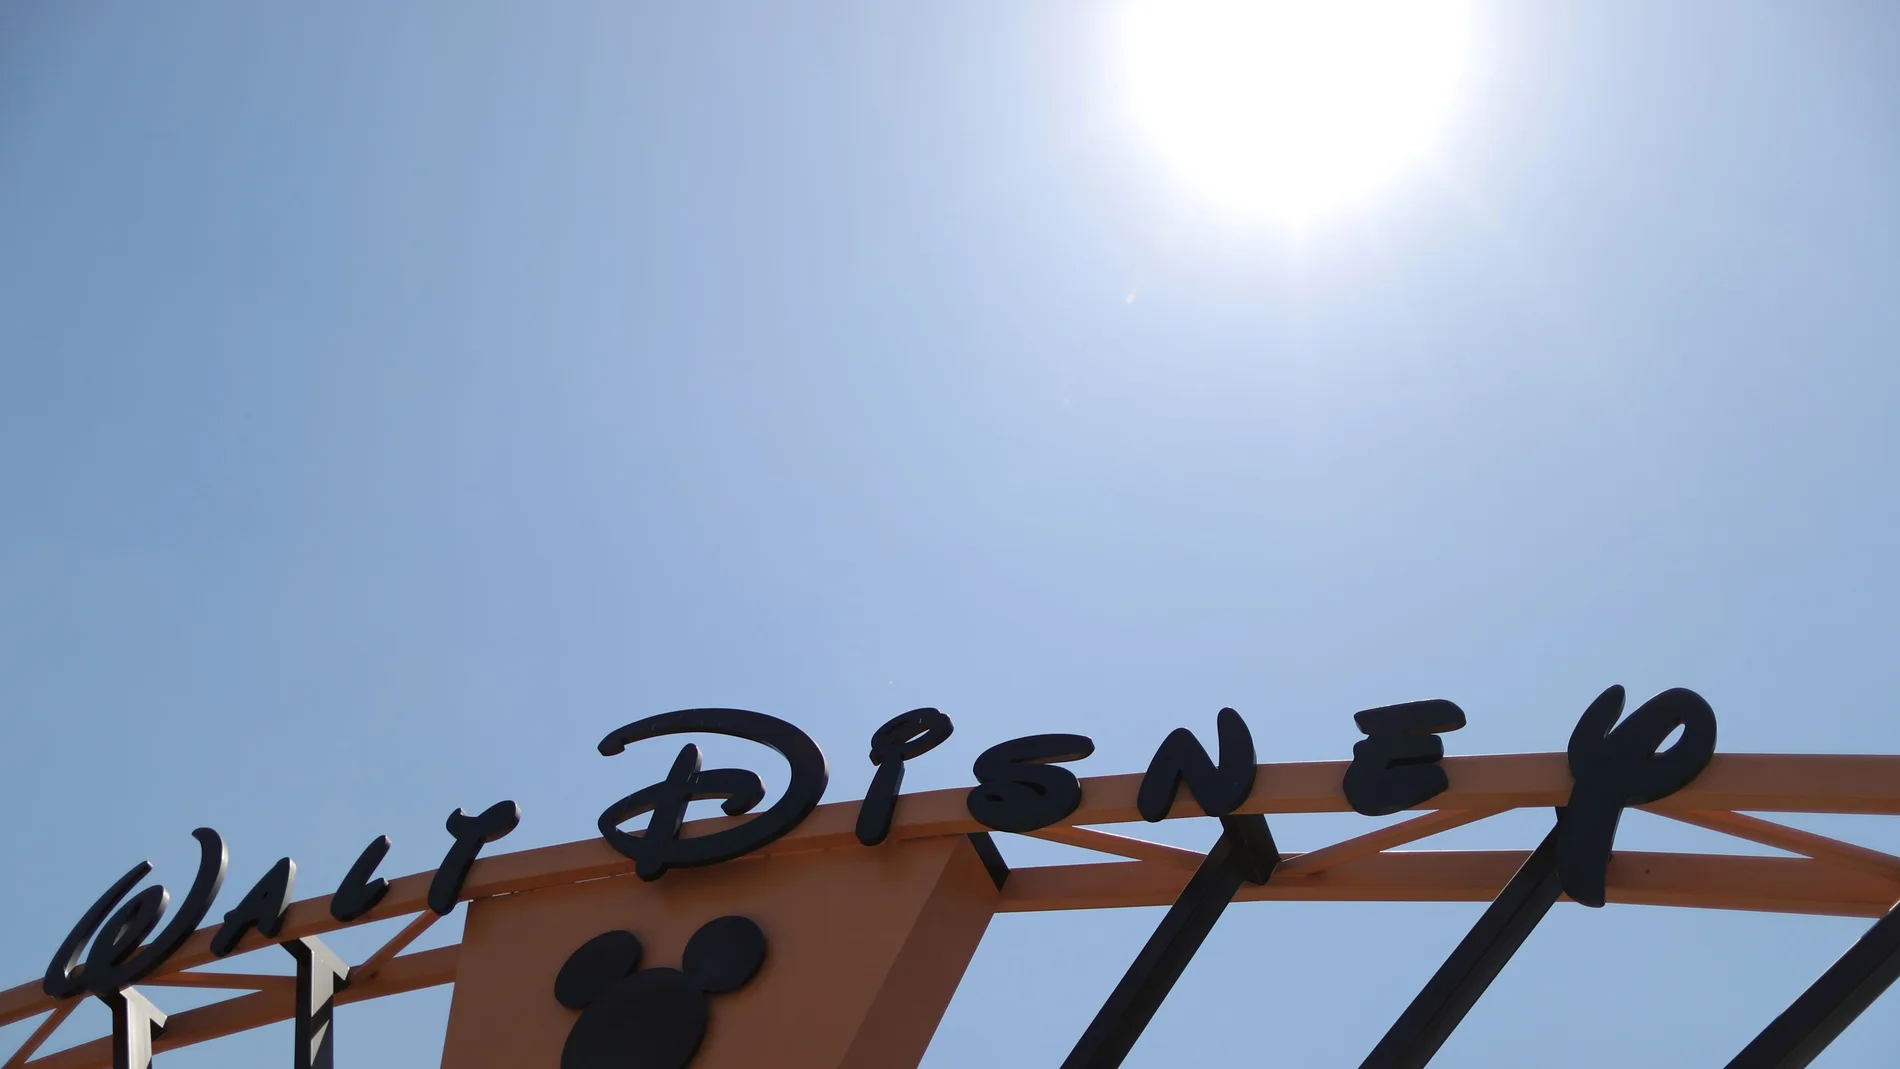 FILE PHOTO: The entrance to Walt Disney studios is seen in Burbank